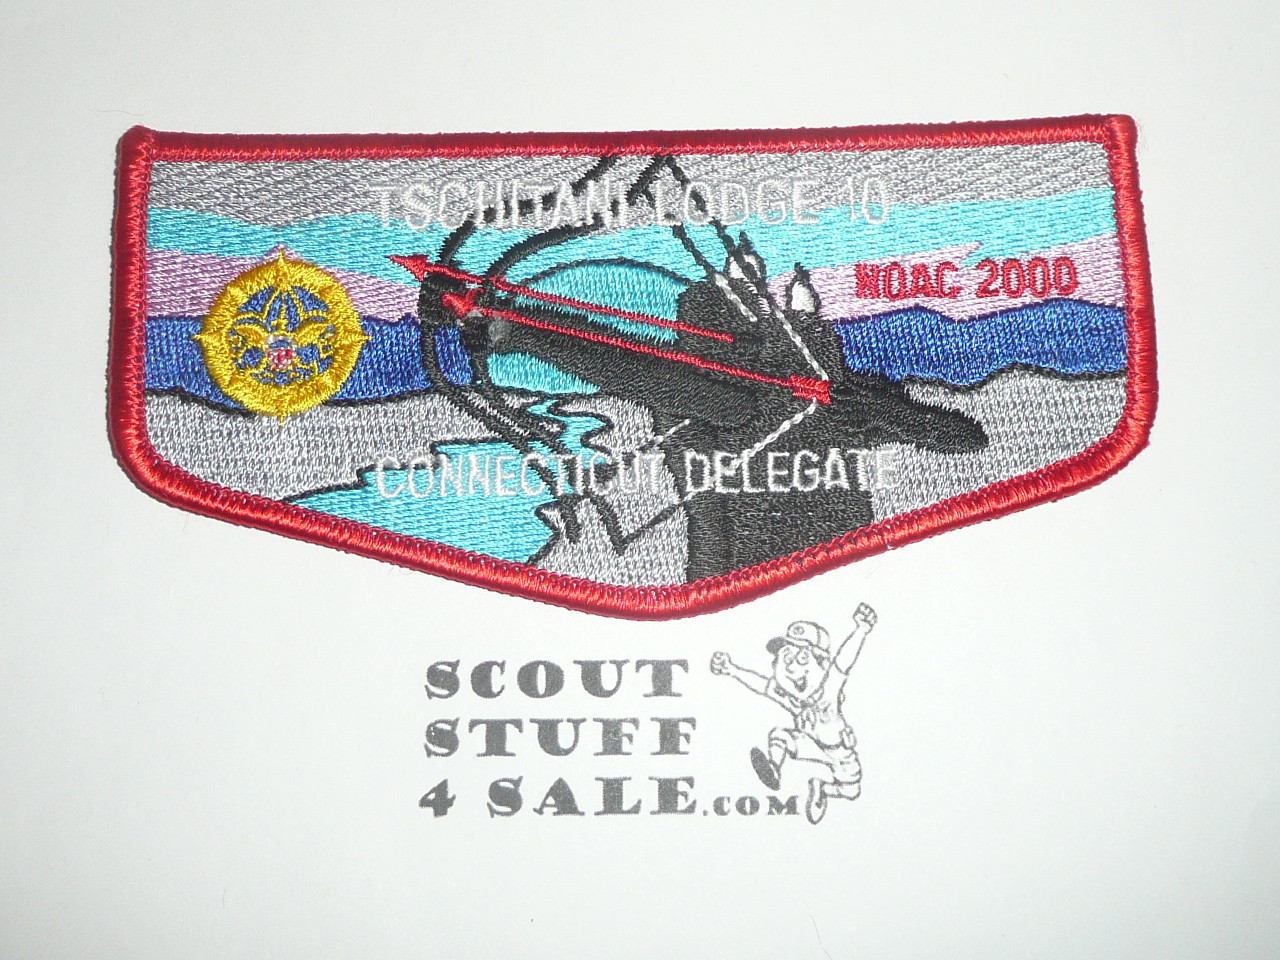 Order of the Arrow Lodge #10 Tschitani s10 2000 NOAC Delegate Flap Patch - Boy Scout